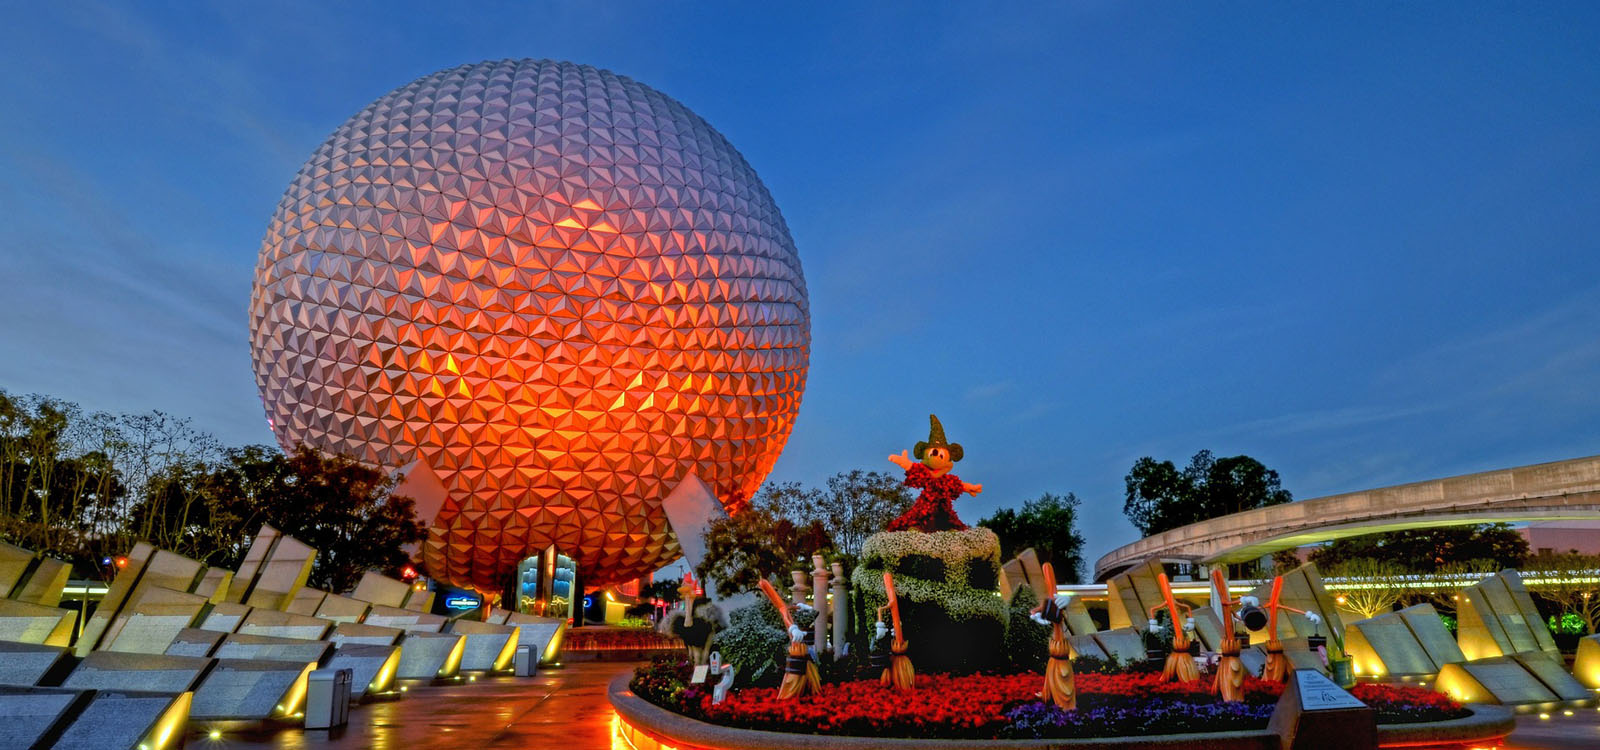 Epcot theme park with globe for Orlando theme park deals.